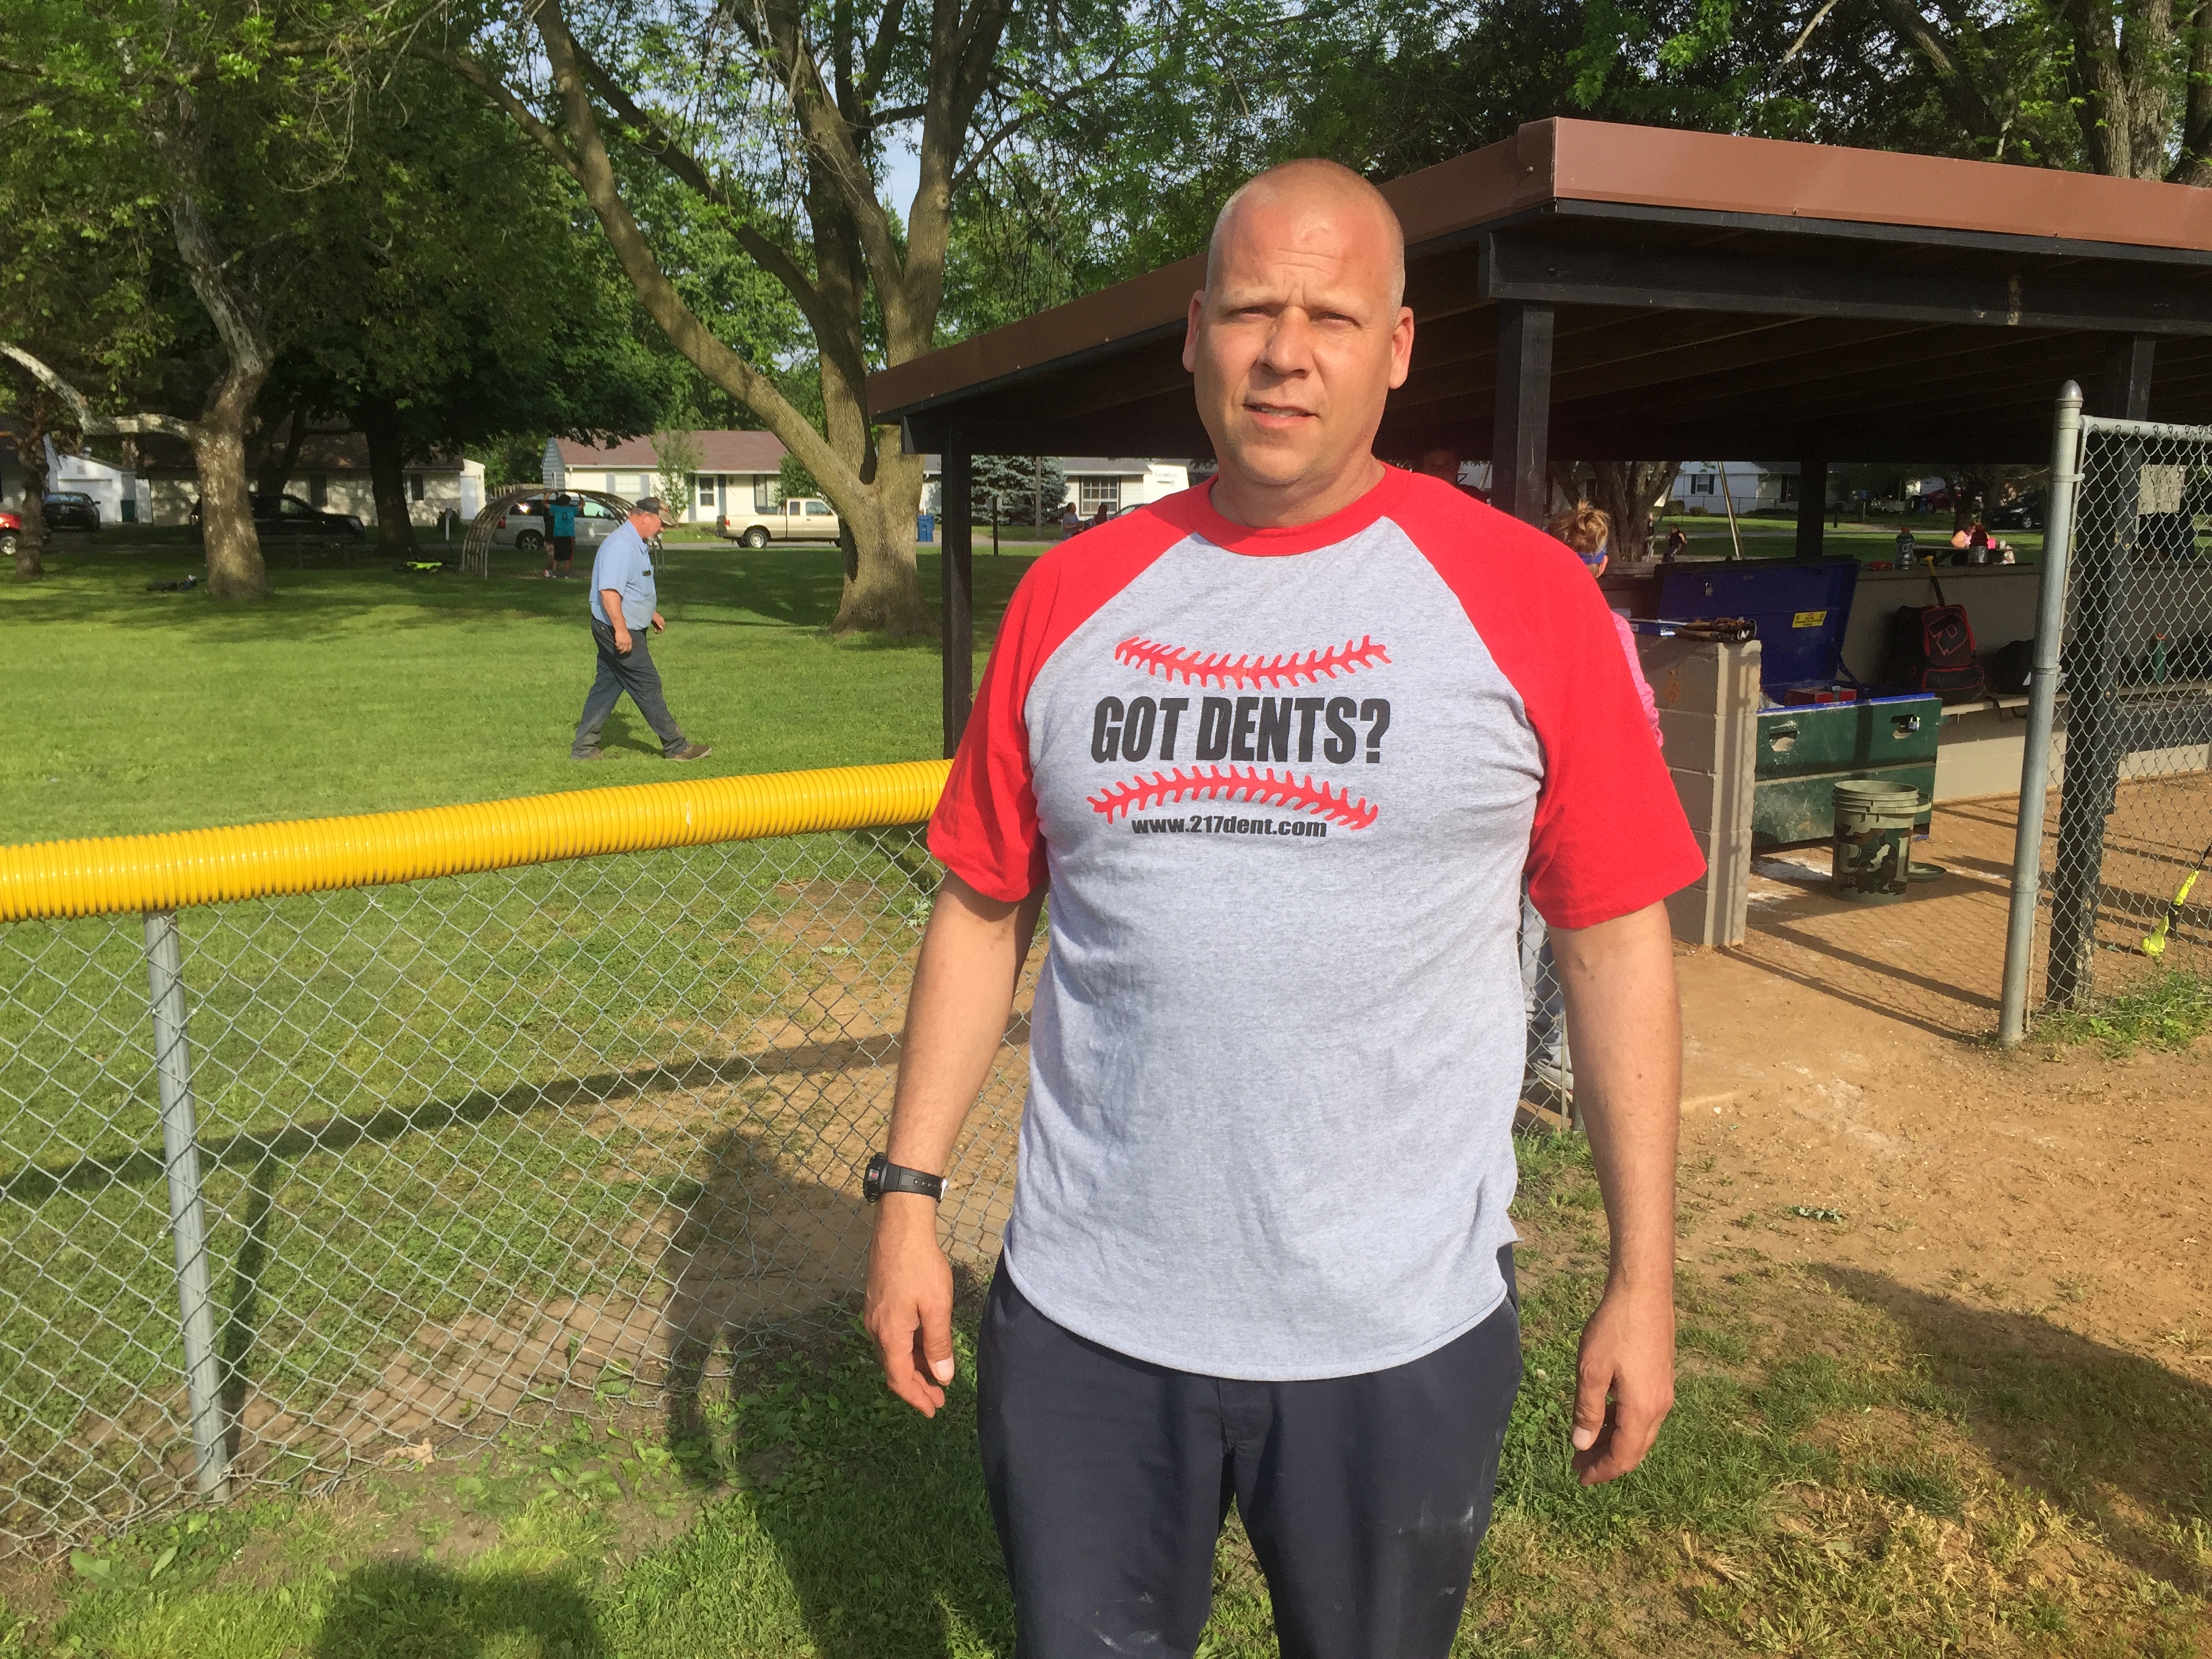 https://217dent.com Baseball Team 2016 Assistant Coach Paul Pfeiffer Springfield, IL